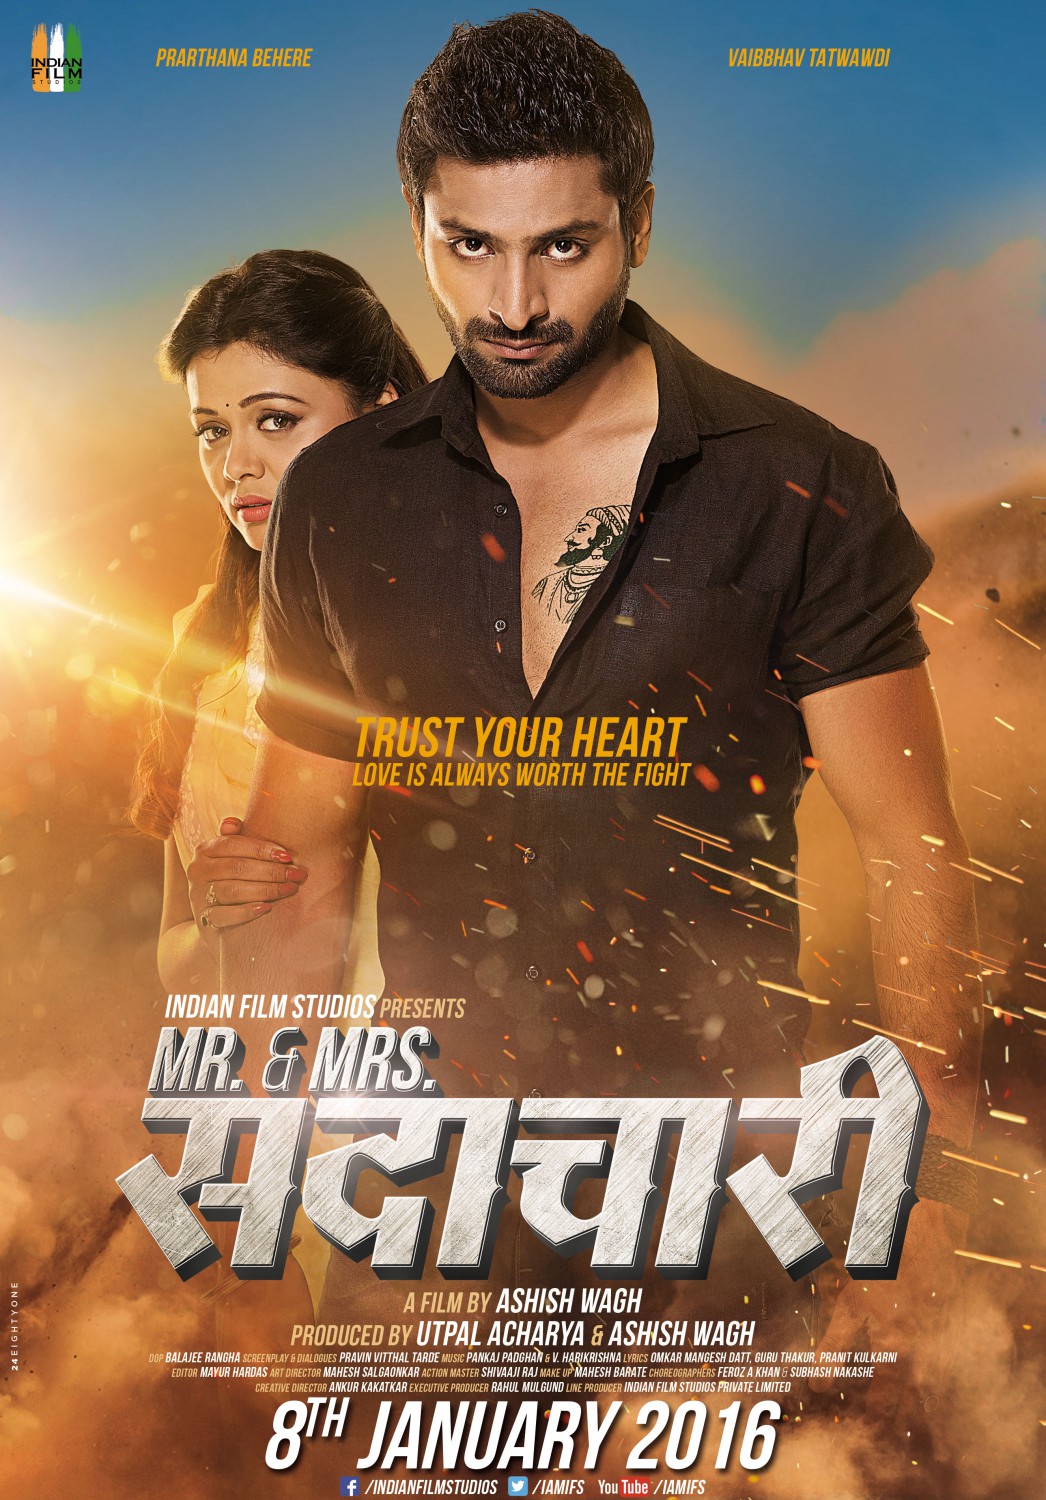 Extra Large Movie Poster Image for Mr & Mrs Sadachari (#1 of 2)